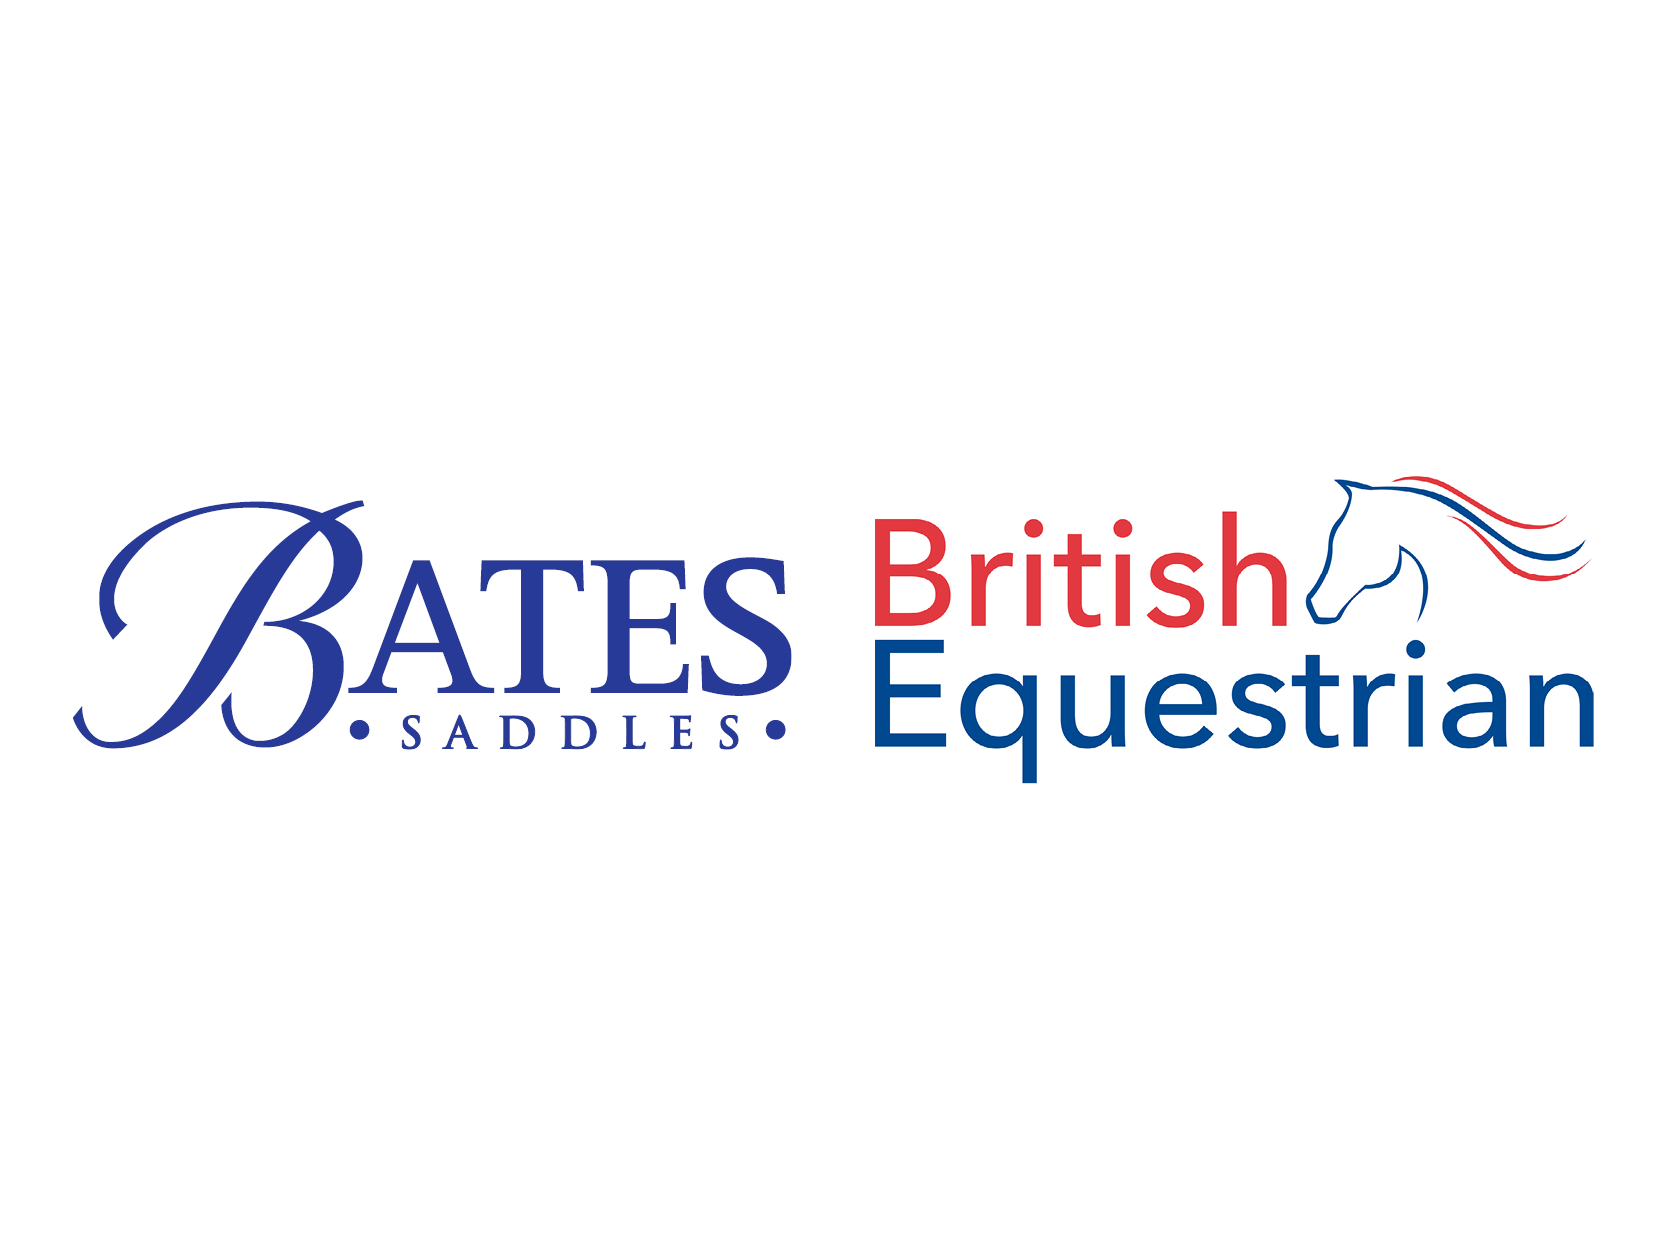 Official Saddle Partner of British Equestrian